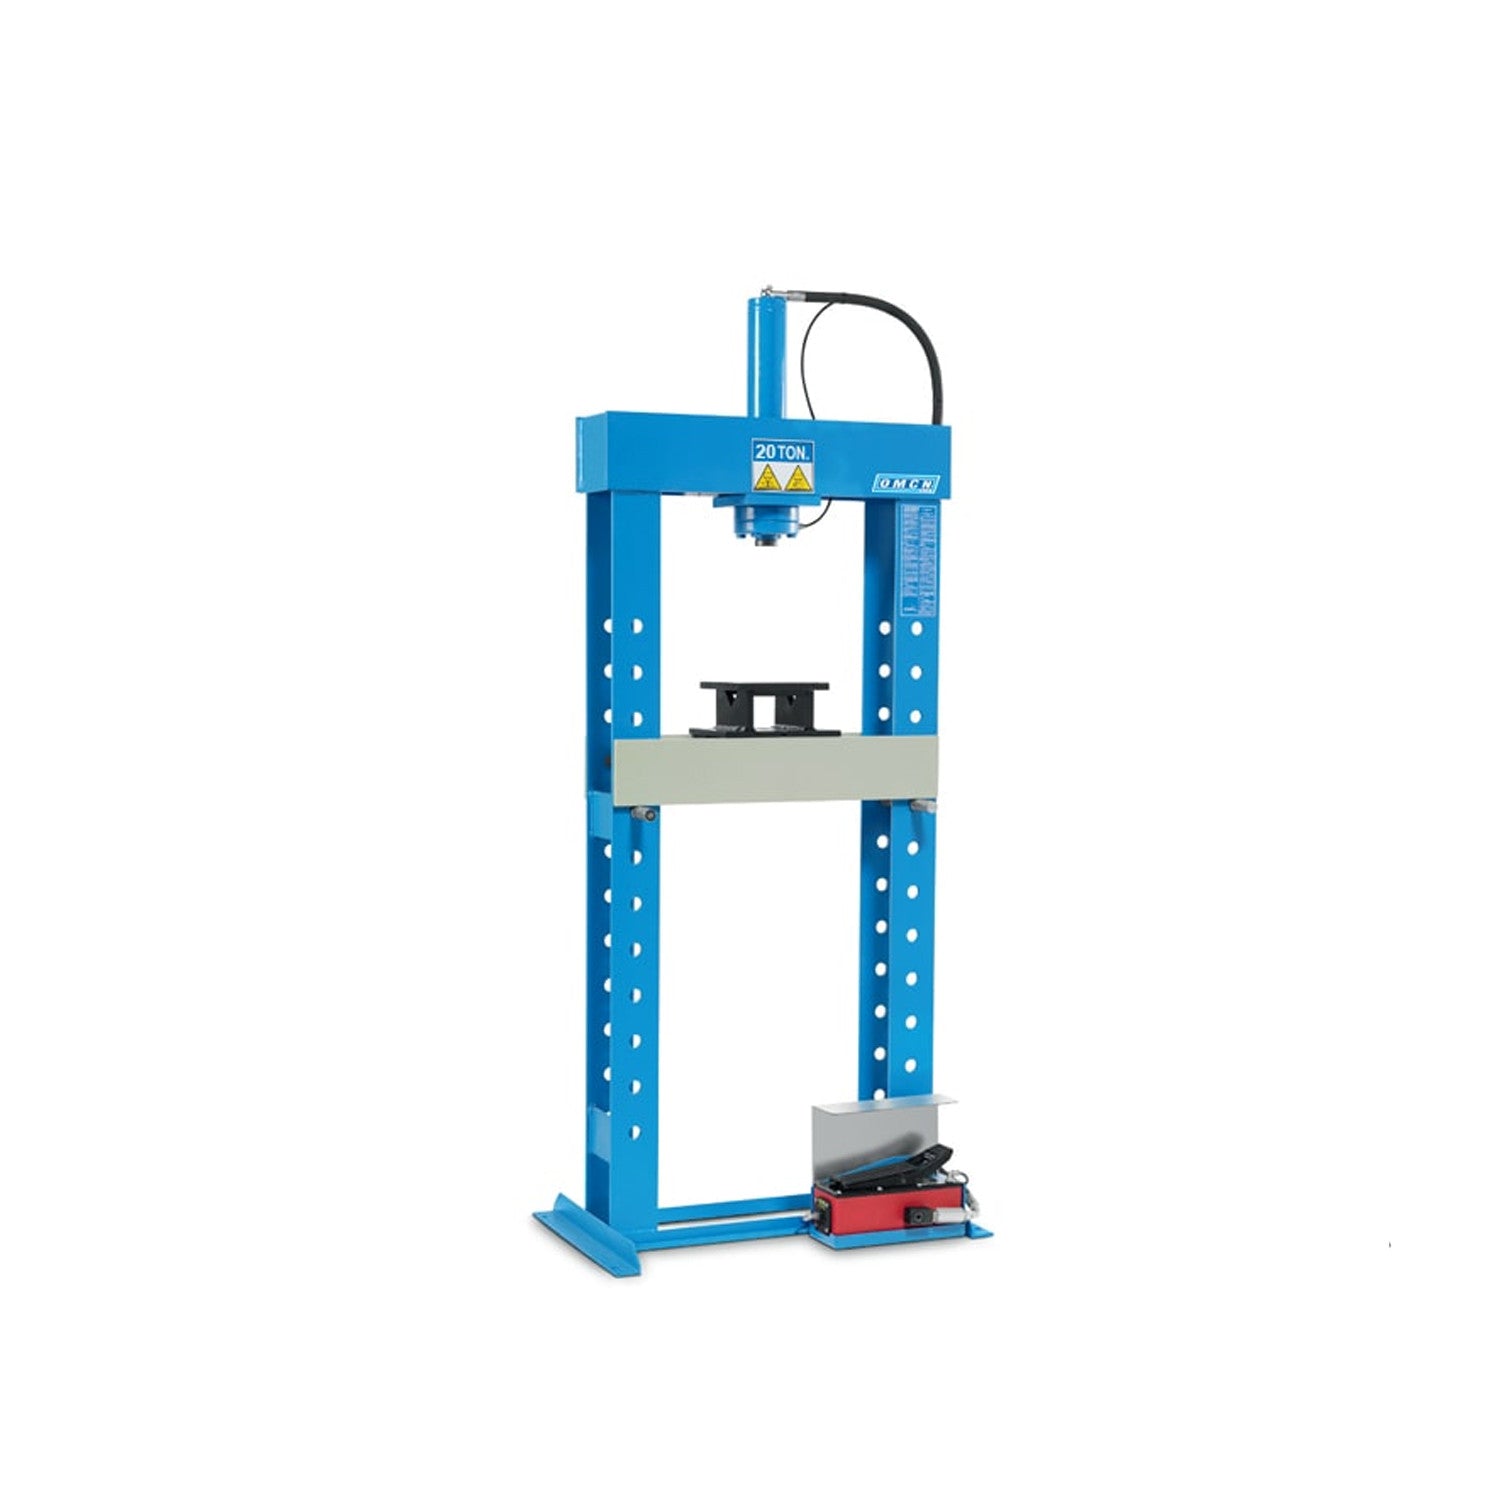 Hydraulic press with hydropneumatic foot pump 20 ton capacity - OMCN 156/IP